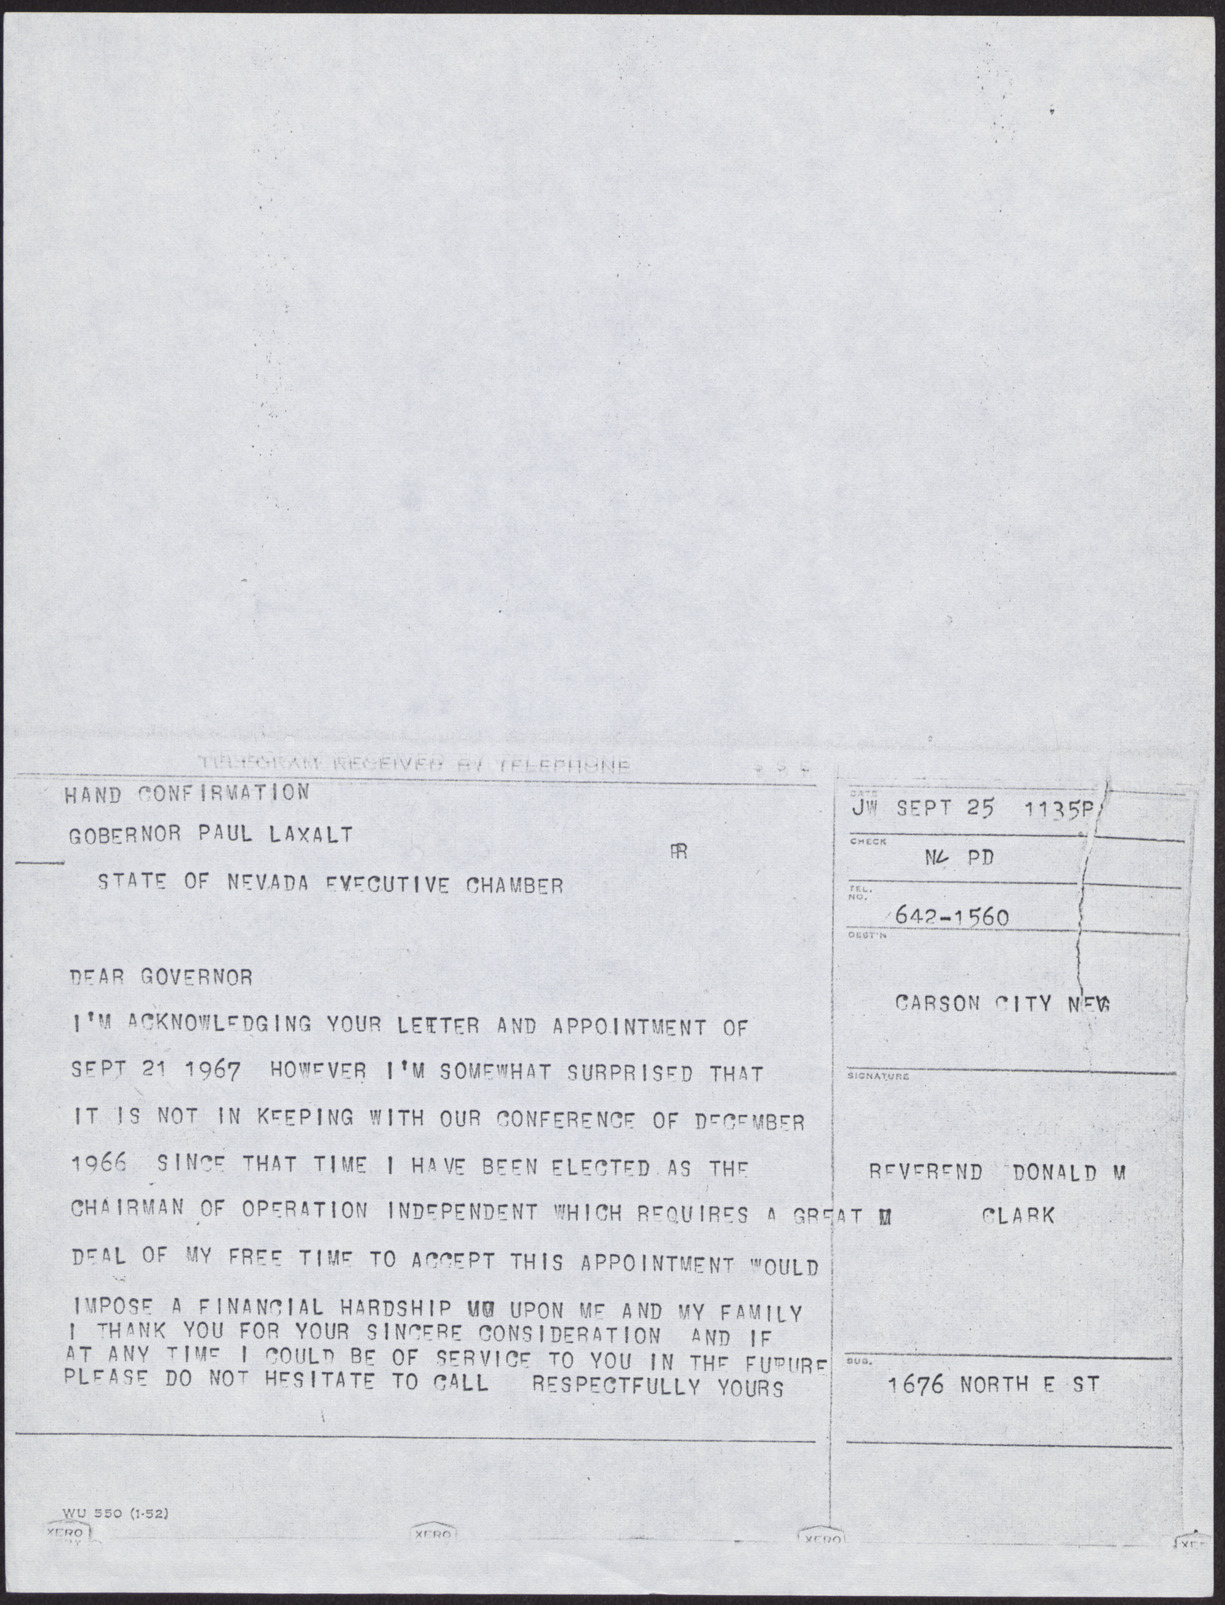 Copy of telegram to Governor Paul Laxalt from Donald M Clark